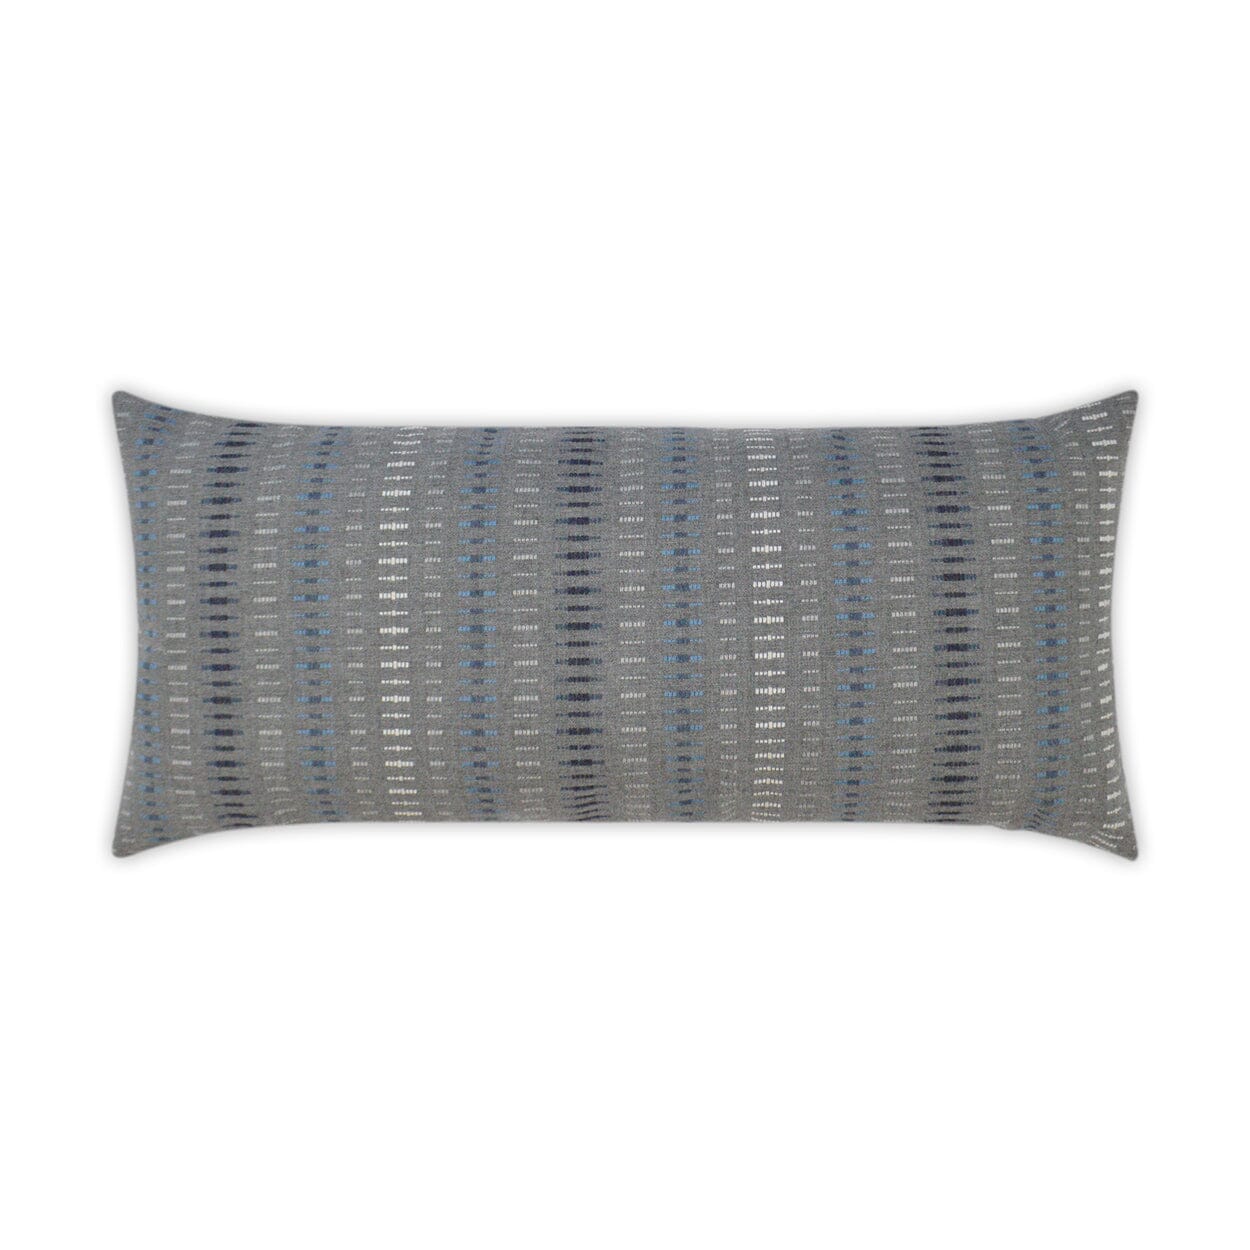 D.V. Kap 12" x 24" Outdoor Lumbar Pillow | Esti Bluestone Pillows D.V Kap Outdoor